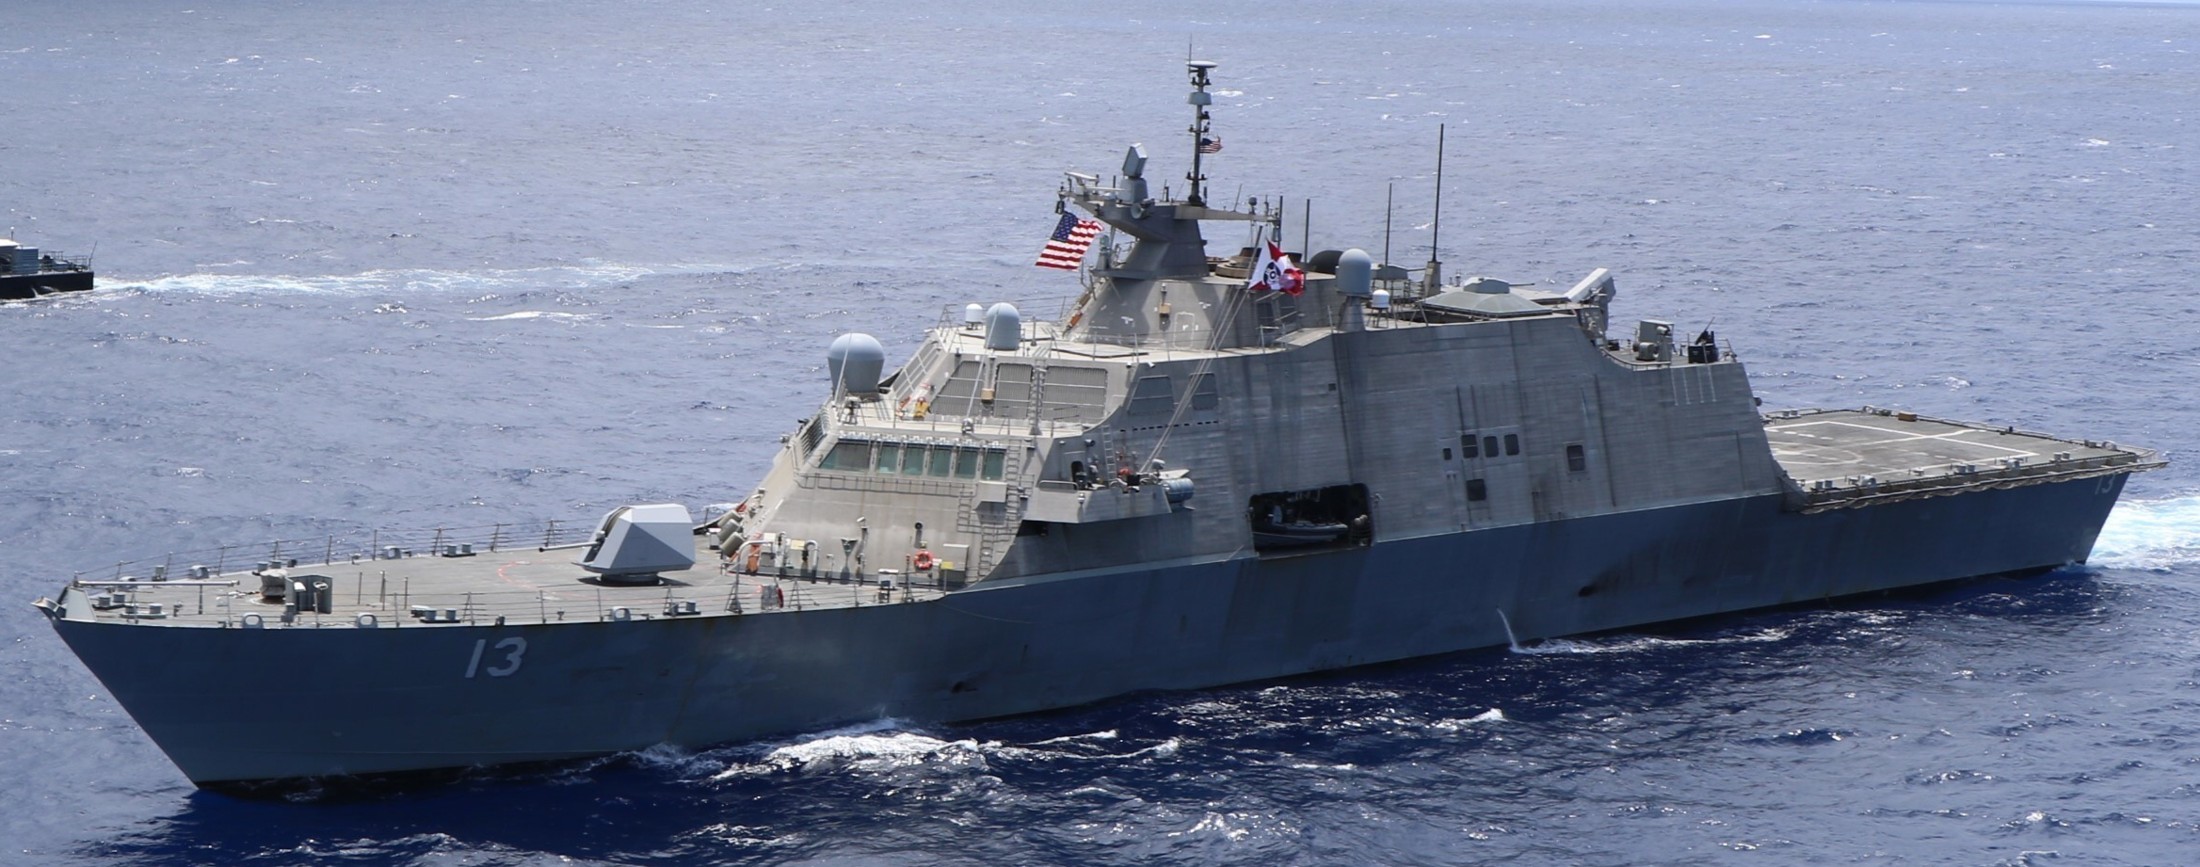 lcs-13 uss wichita freedom class littoral combat ship us navy caribbean sea 32